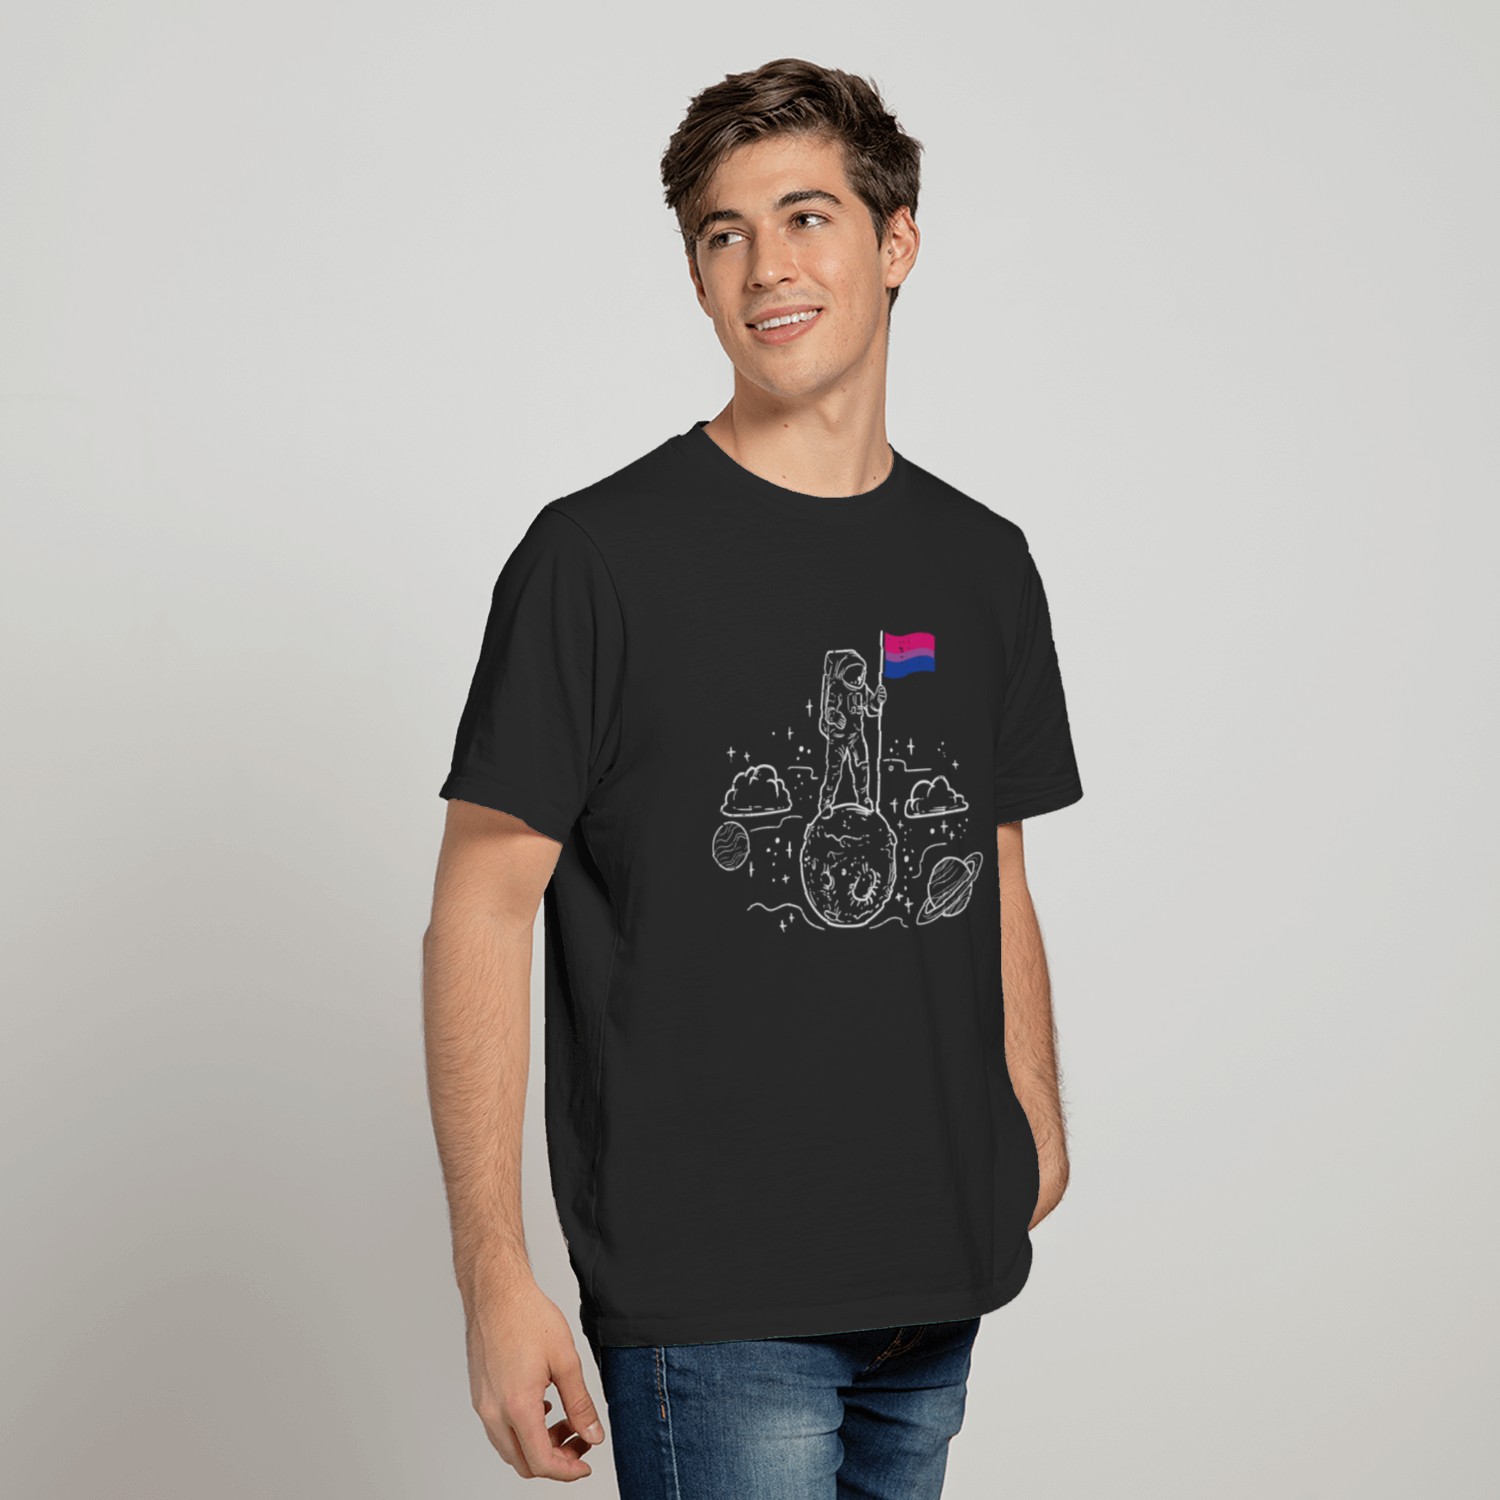 Astronaut Moon Bisexual Flag Space LGBTQ Gay Pride Ally Bi T-Shirt